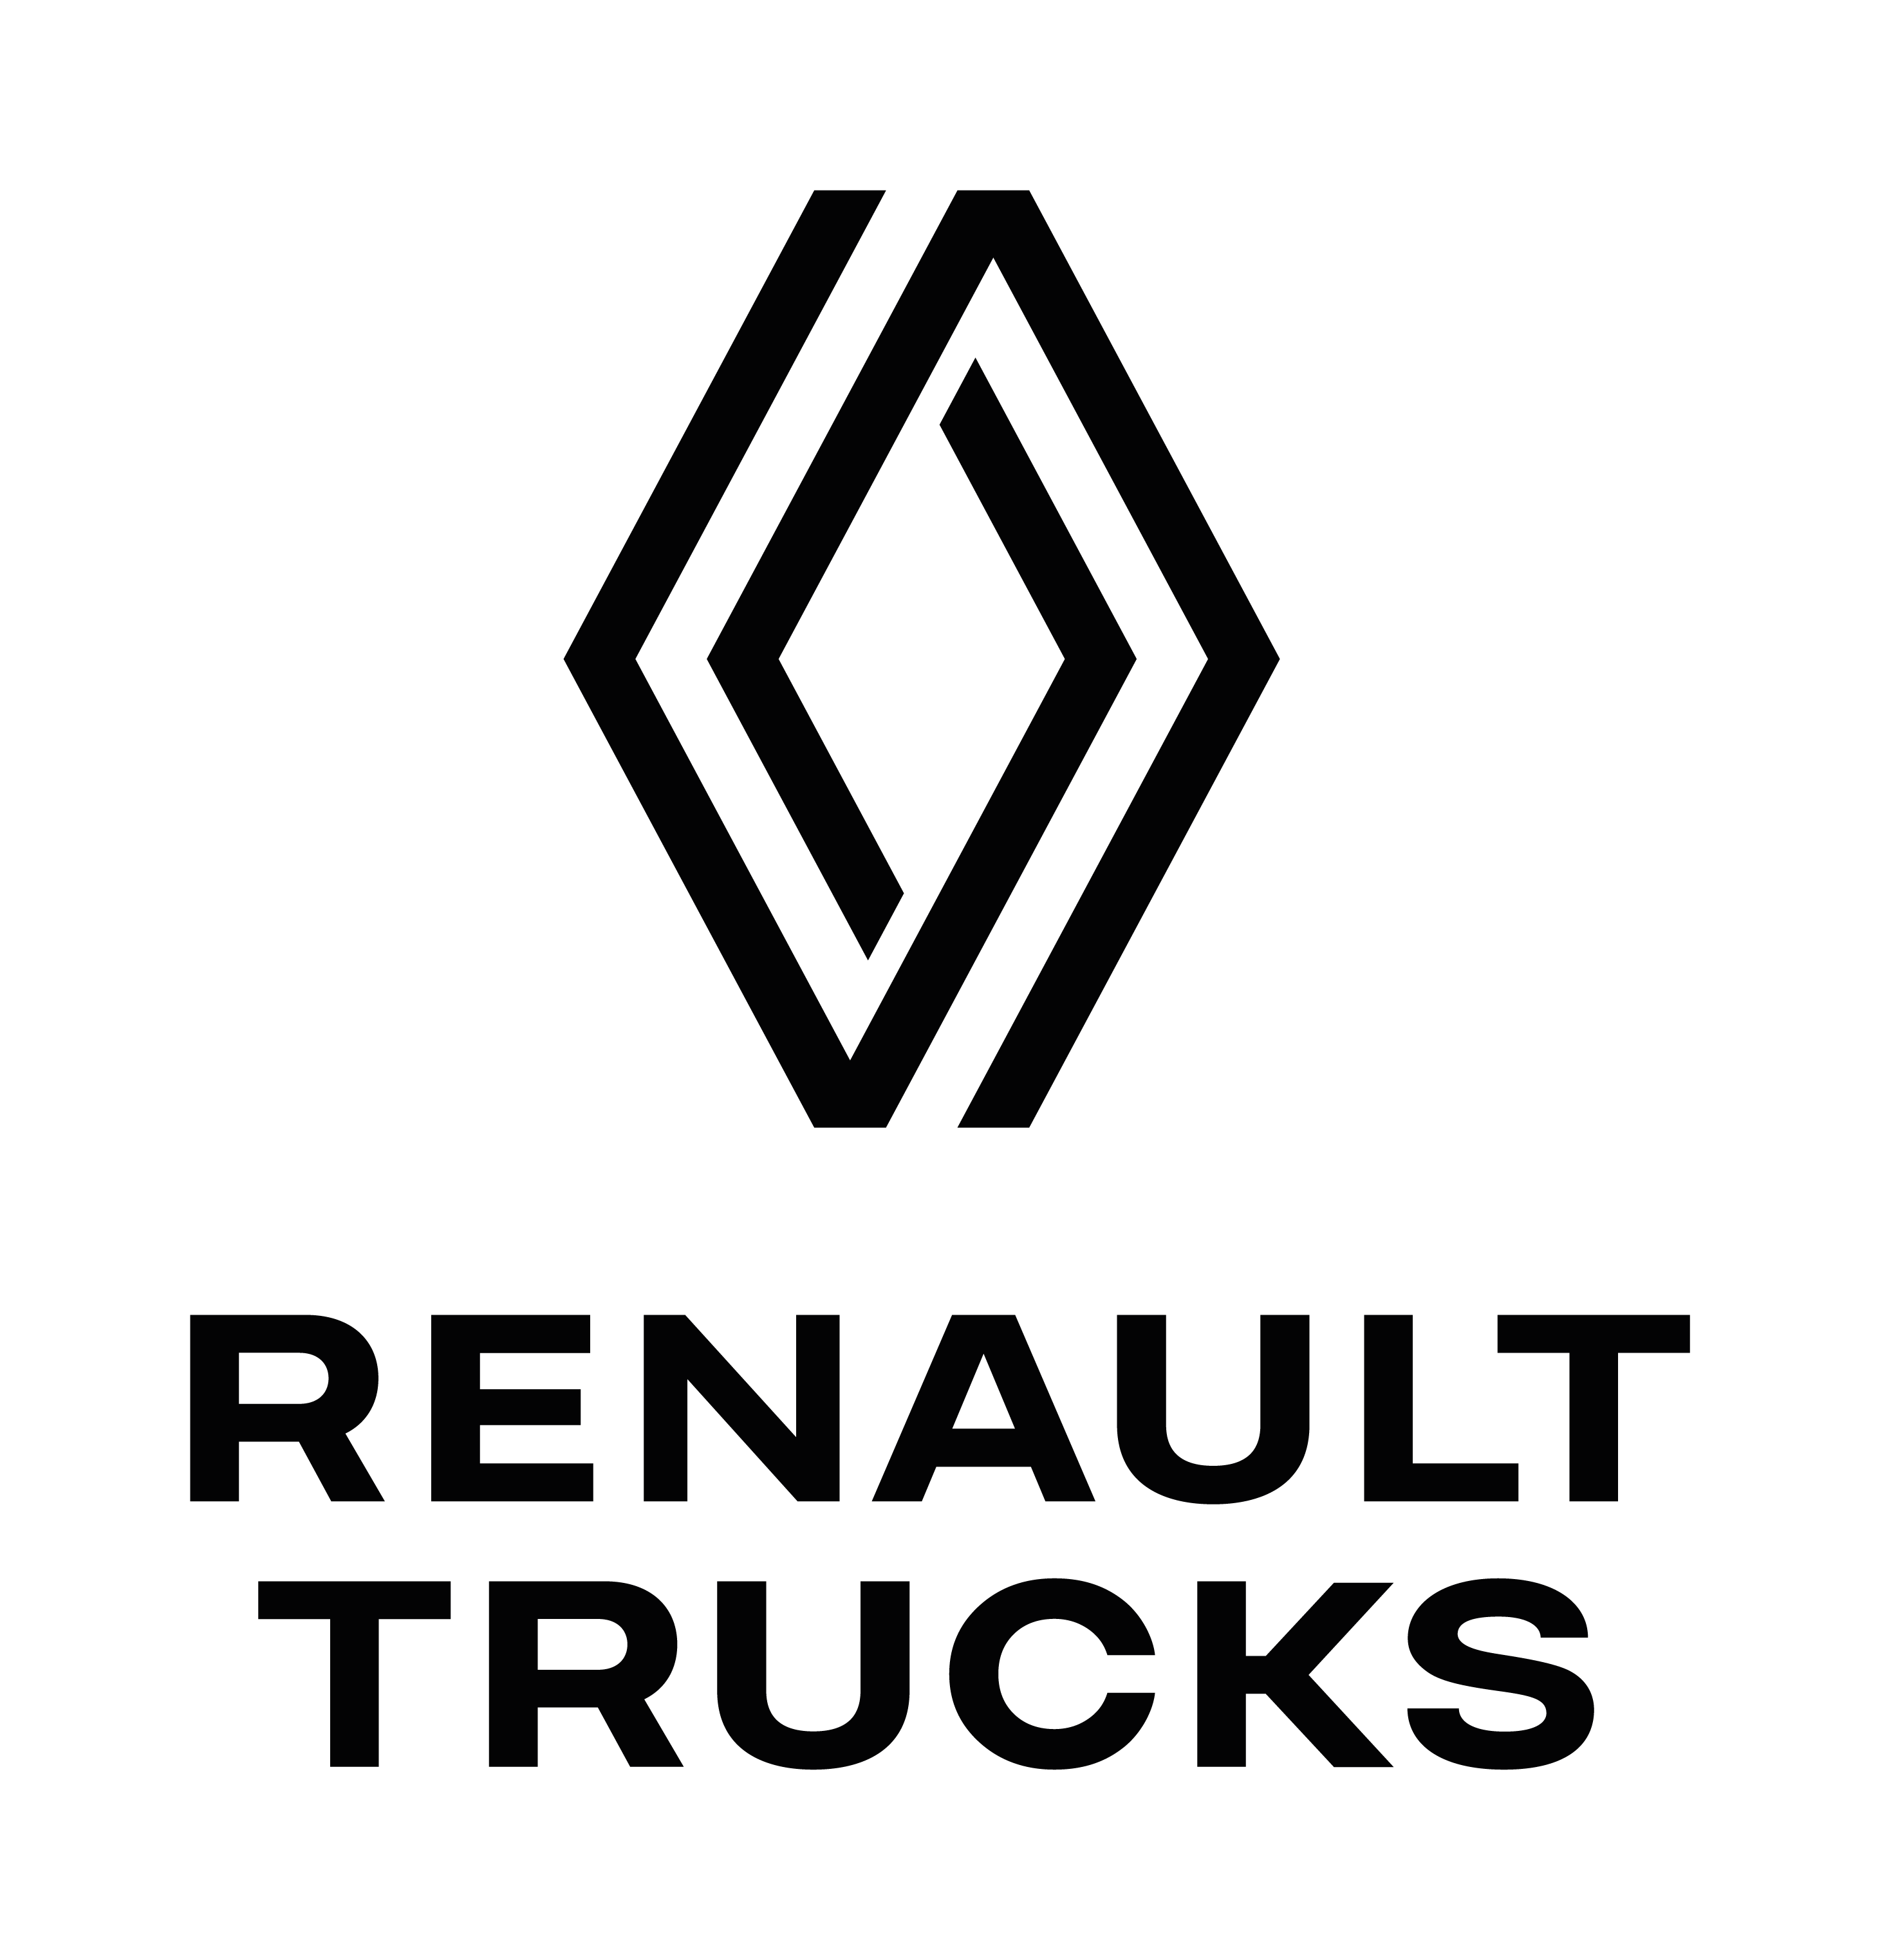 Renault trucks in Nigeria